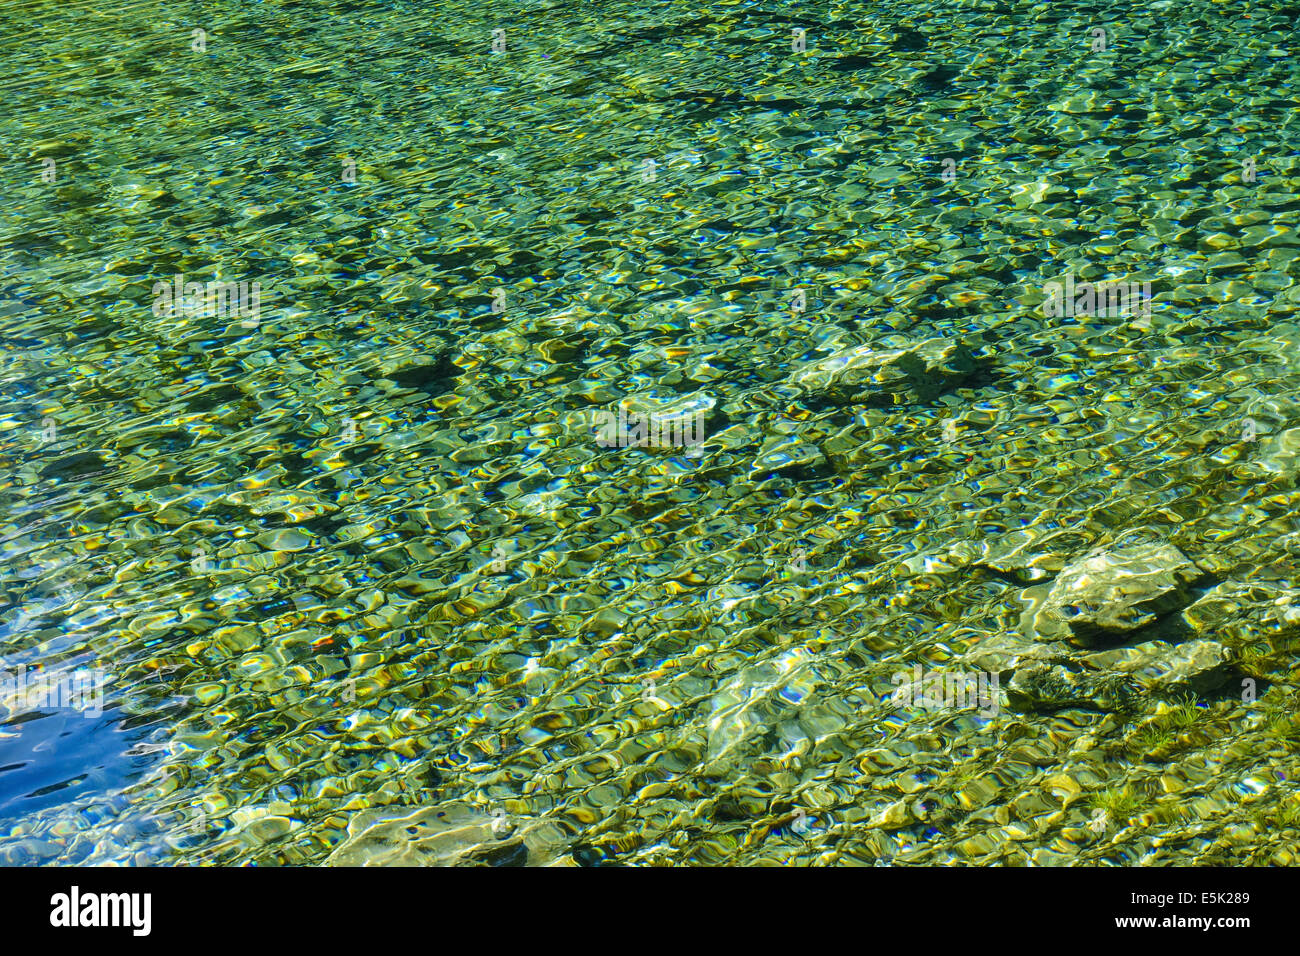 Tragoess, green lake, Gruener See Stock Photo